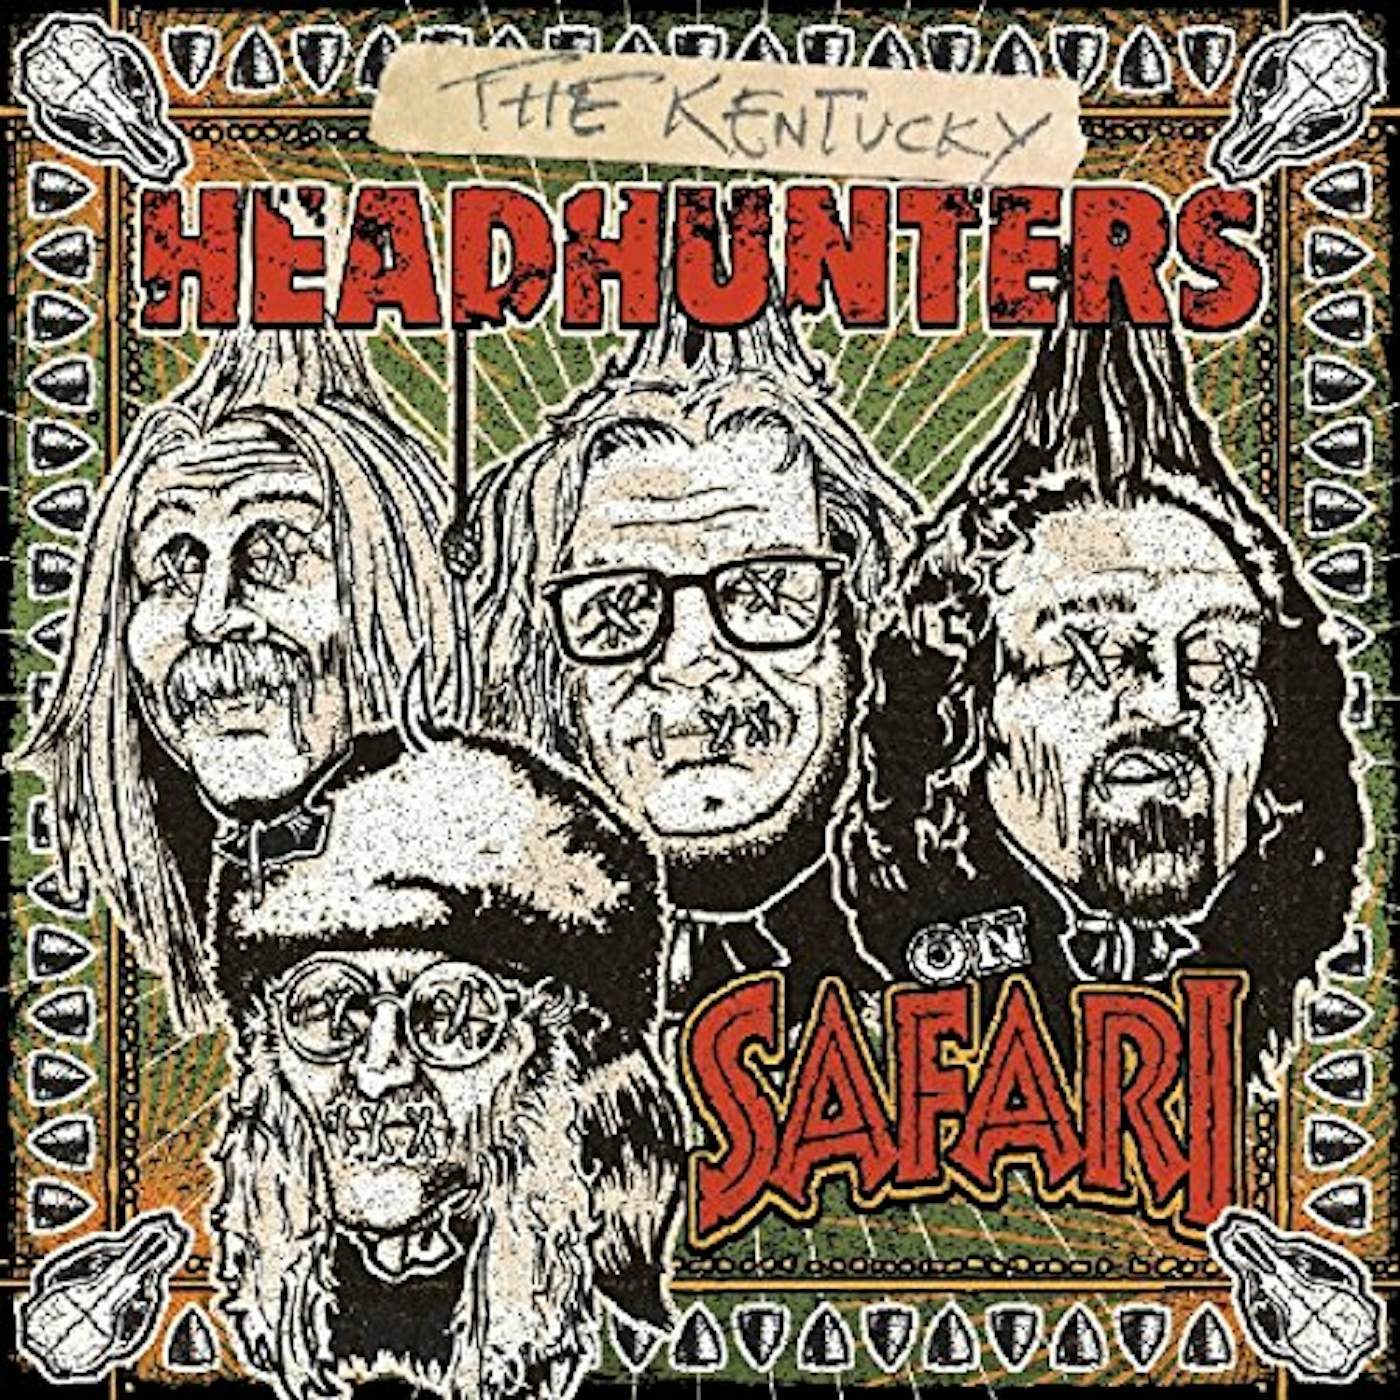 The Kentucky Headhunters ON SAFARI CD